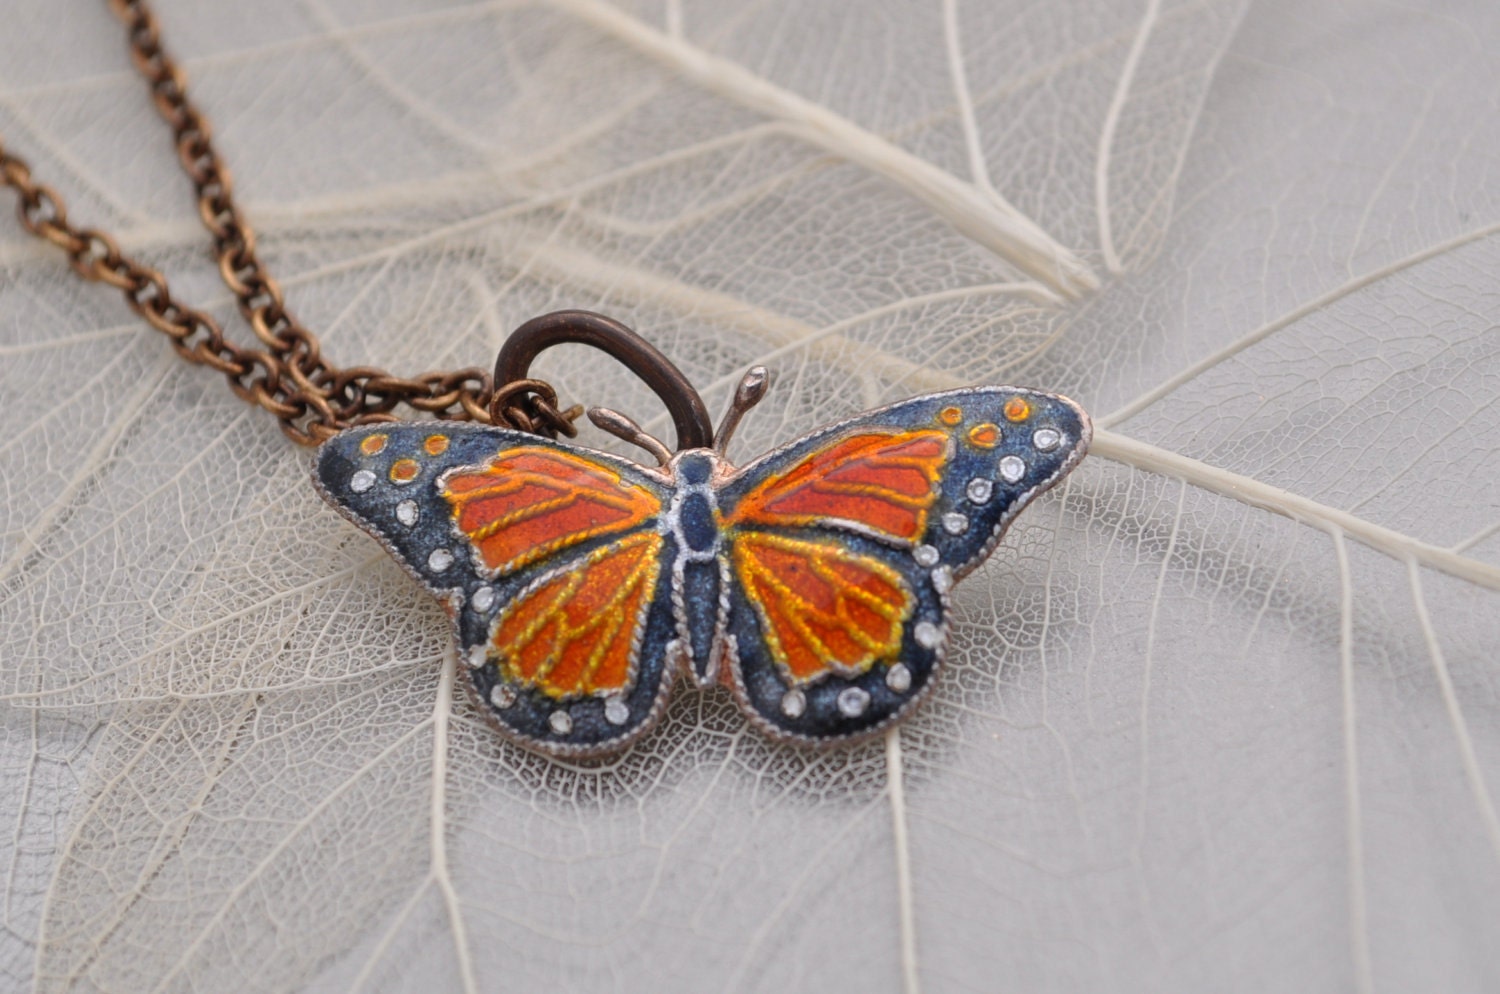 cloisonnÃ© monarch butterfly necklace - DeniseDionDesigns